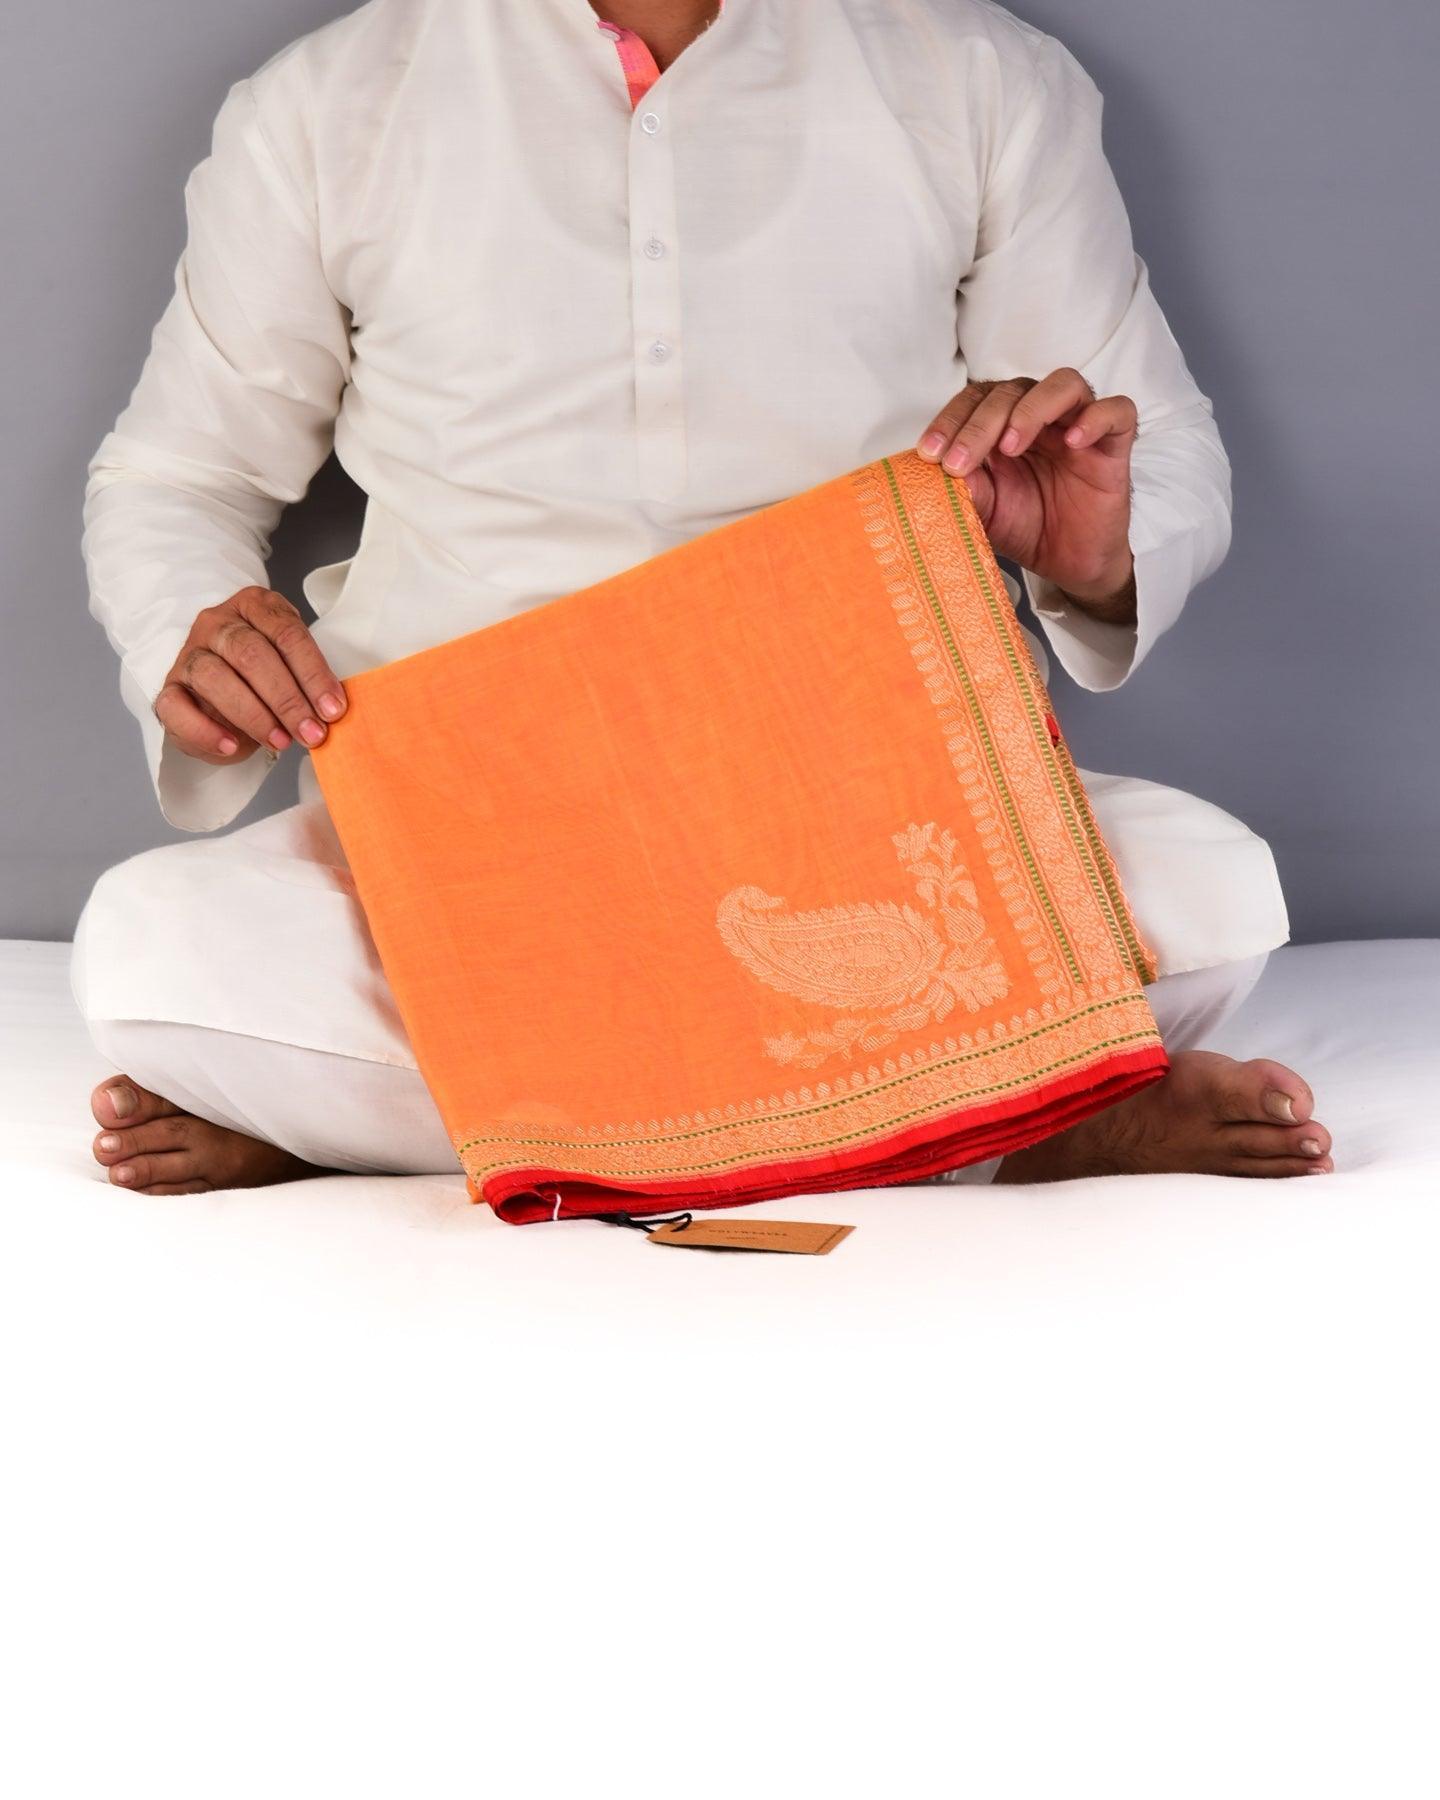 Sunny Orange Handwoven Banarasi Kadhuan Brocade Handloom Cotton Saree - By HolyWeaves, Benares